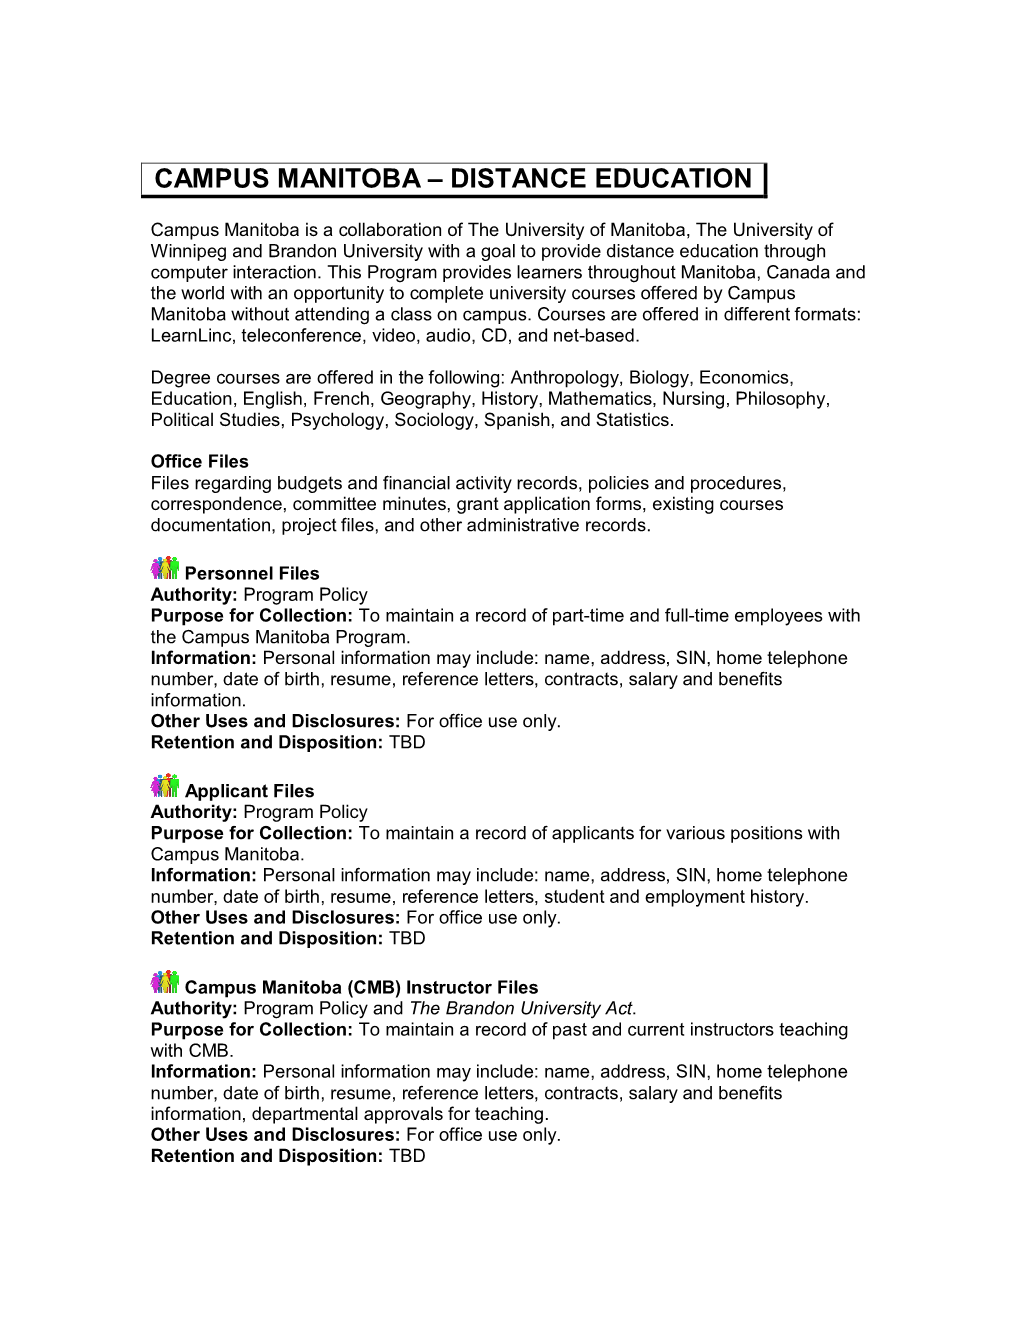 Campus Manitoba – Distance Education